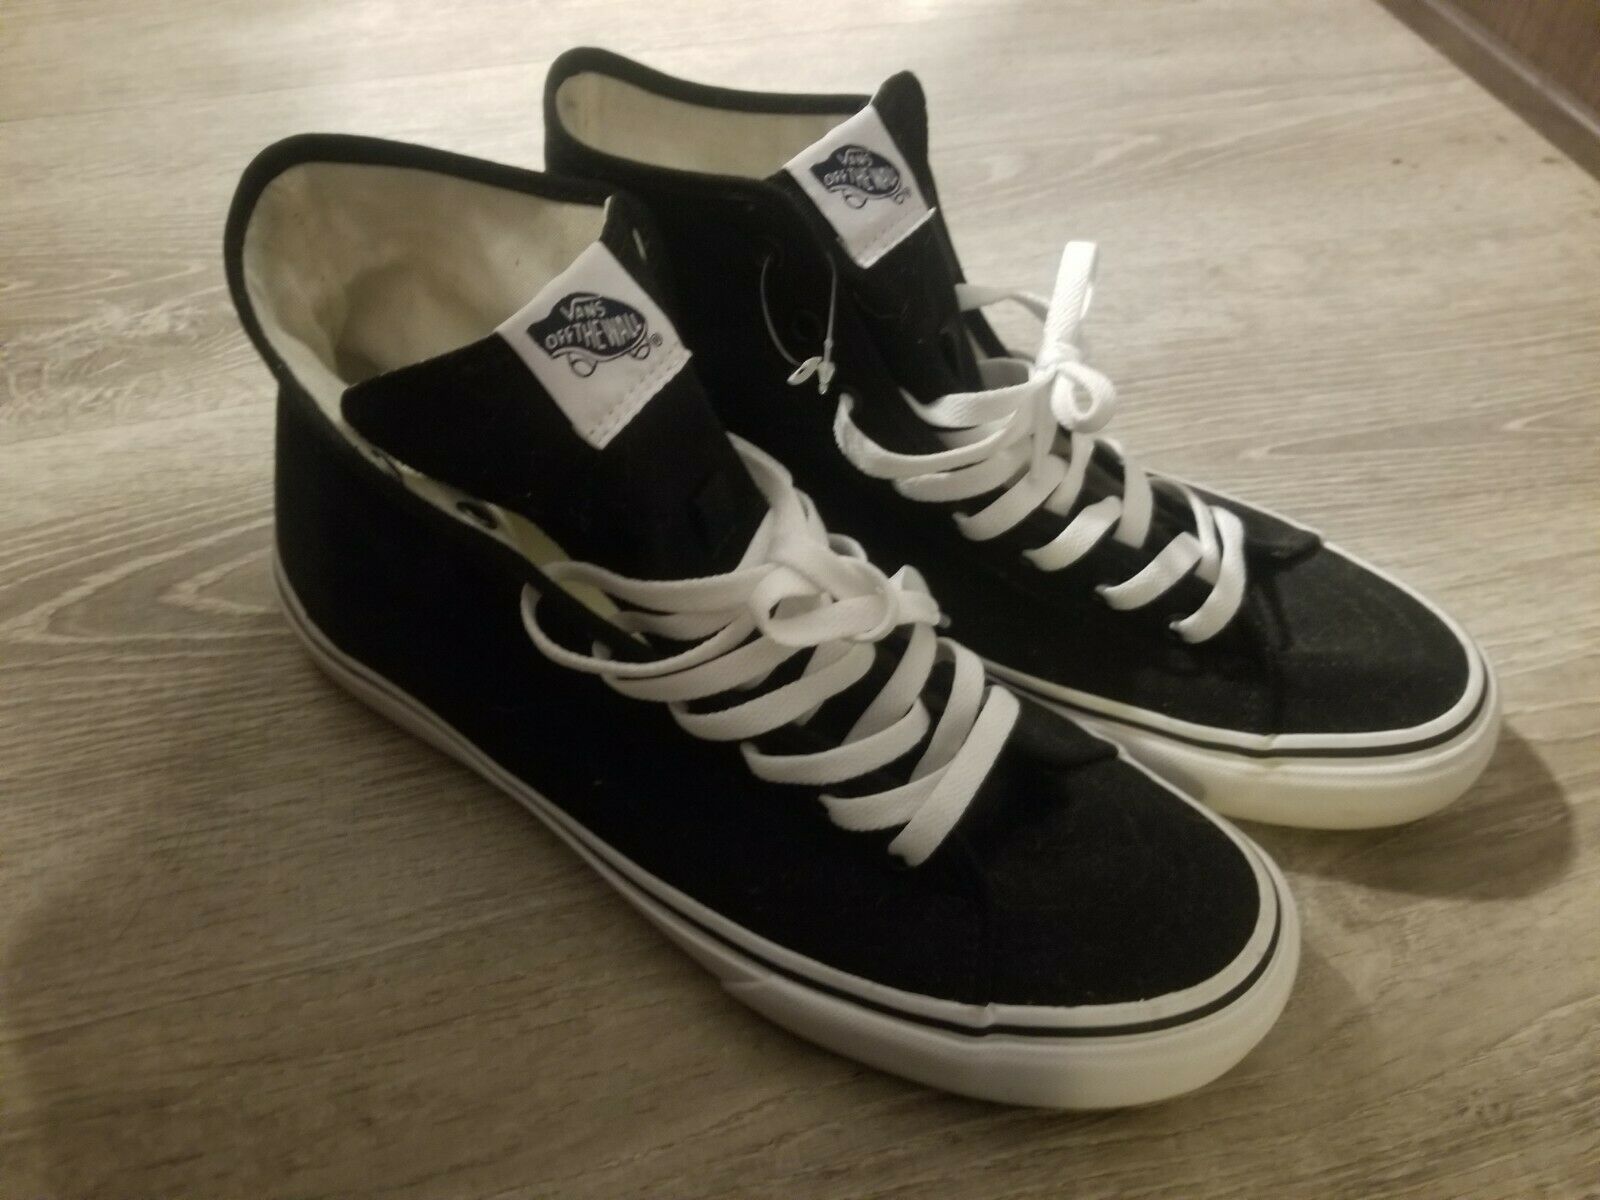 vans high tops 11 black white skate shoes waffle sole size 11 van's Nice